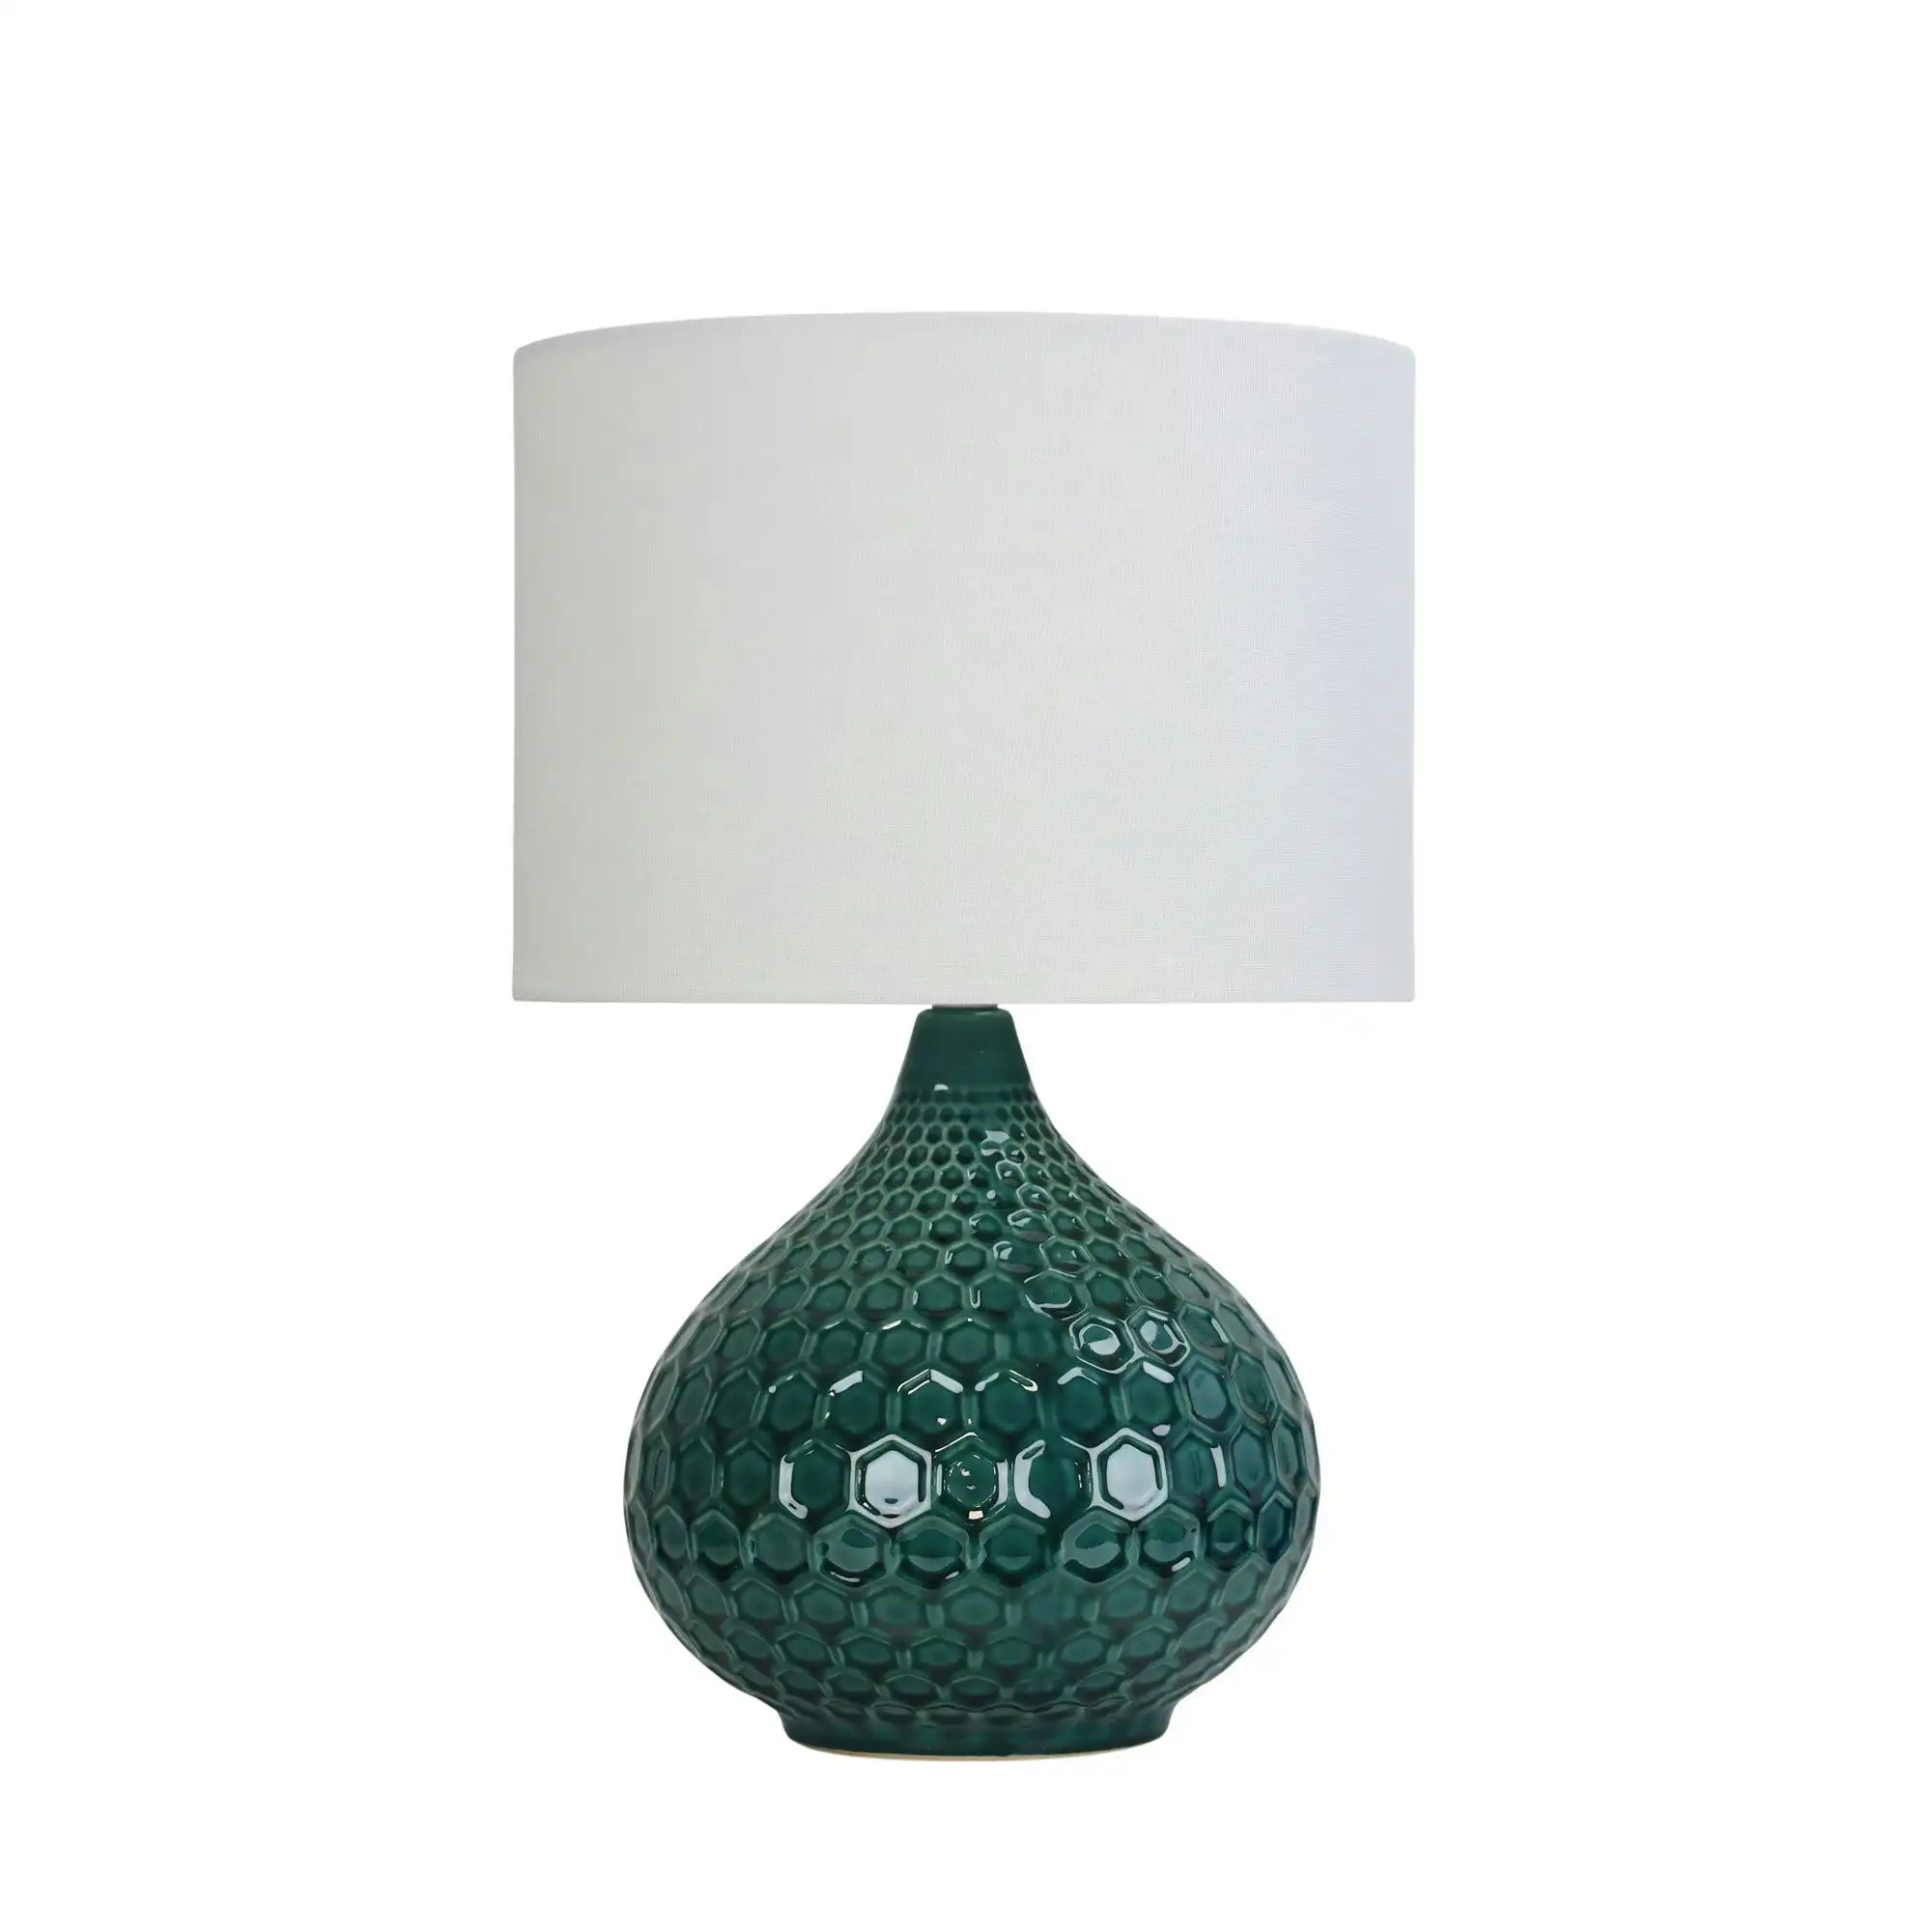 RIDLEY Ceramic Table Lamp